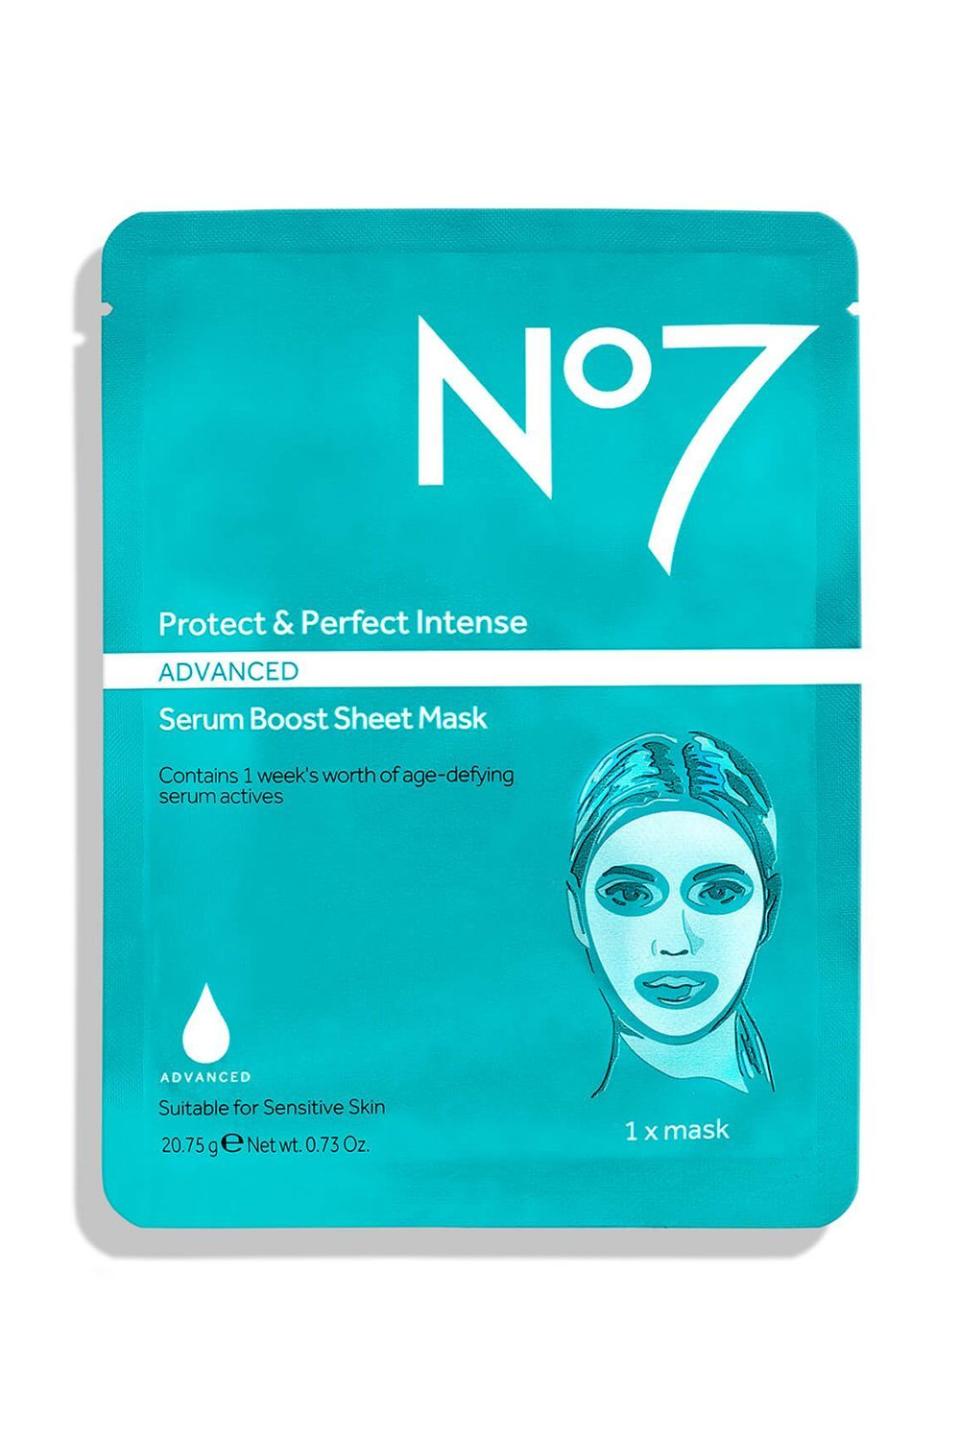 6) No7 Protect & Perfect Intense Advanced Serum Boost Sheet Mask